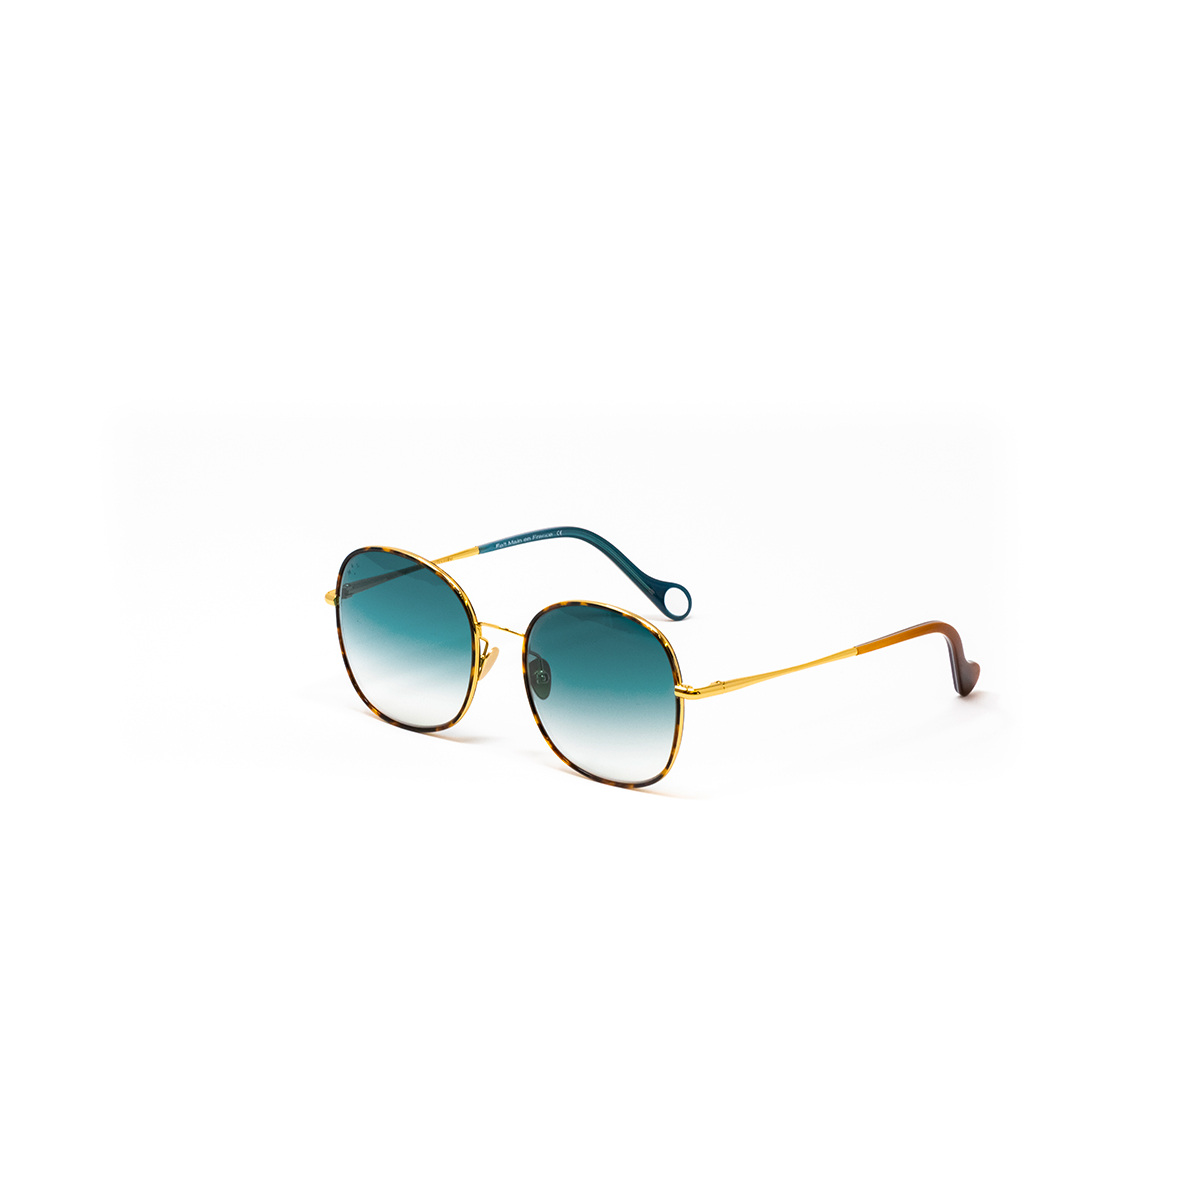 Sunglasses Diana, Blue gradient - Size 53-20 - Steel - image 2